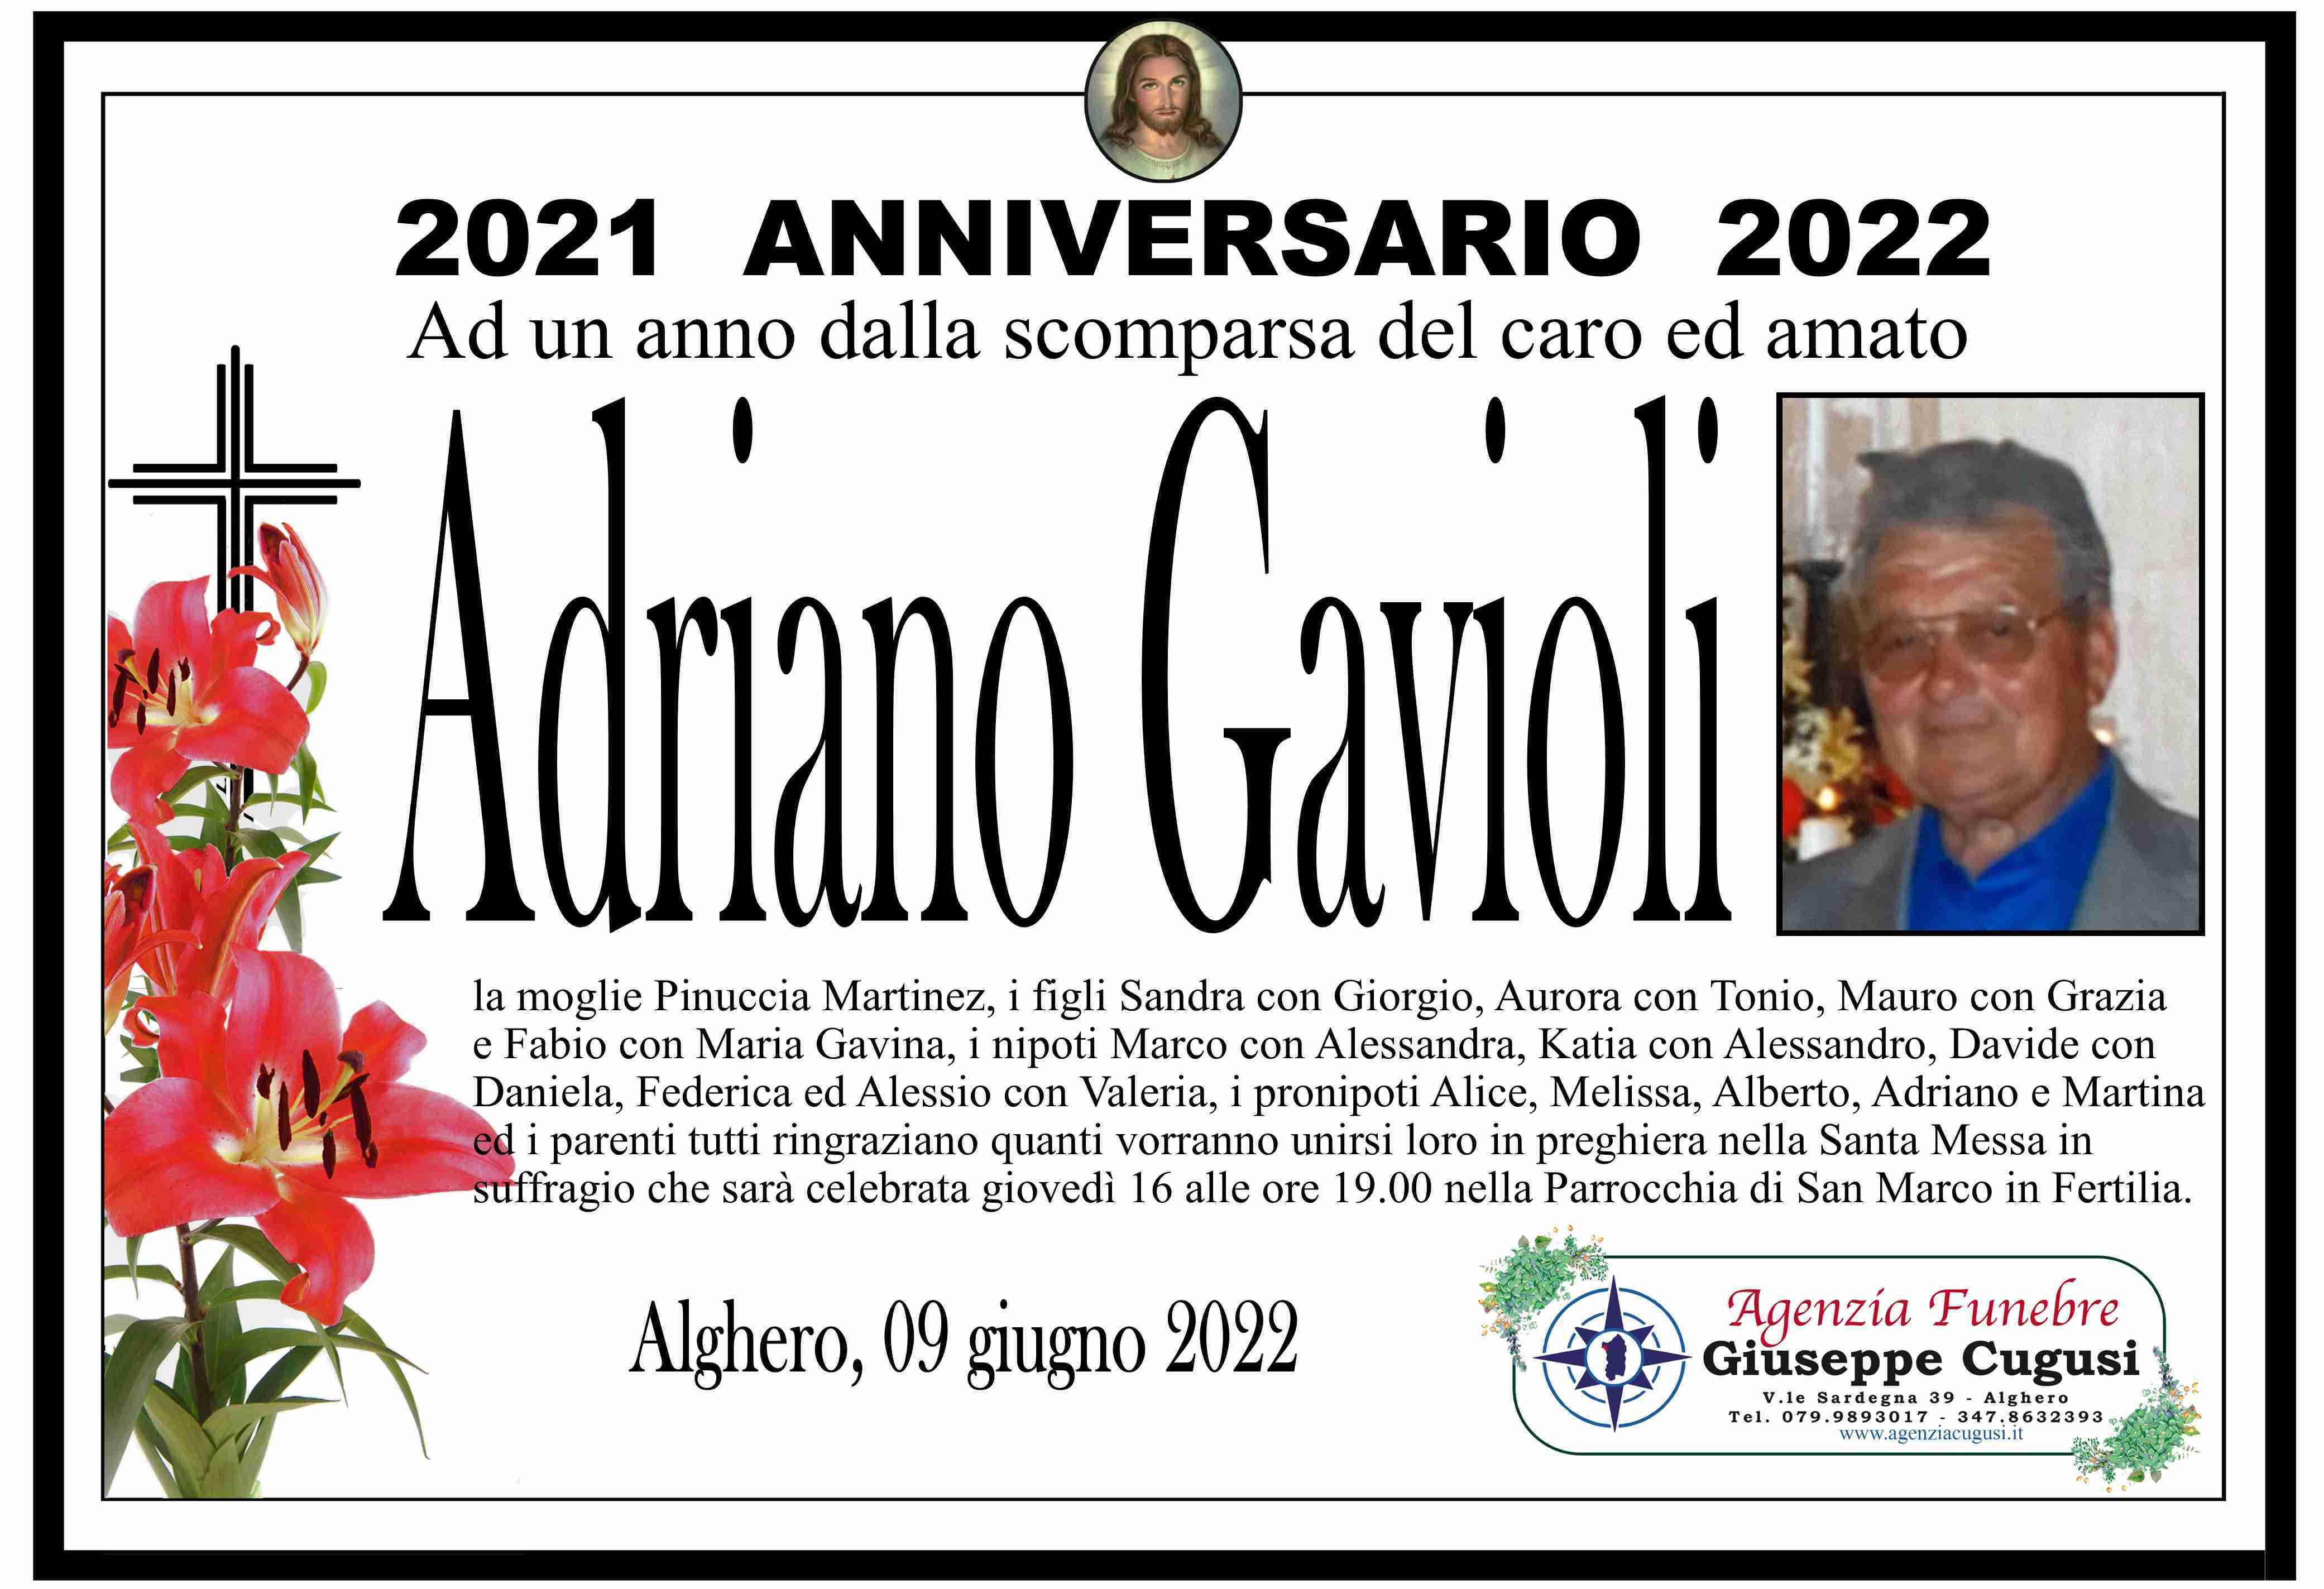 Adriano Gavioli